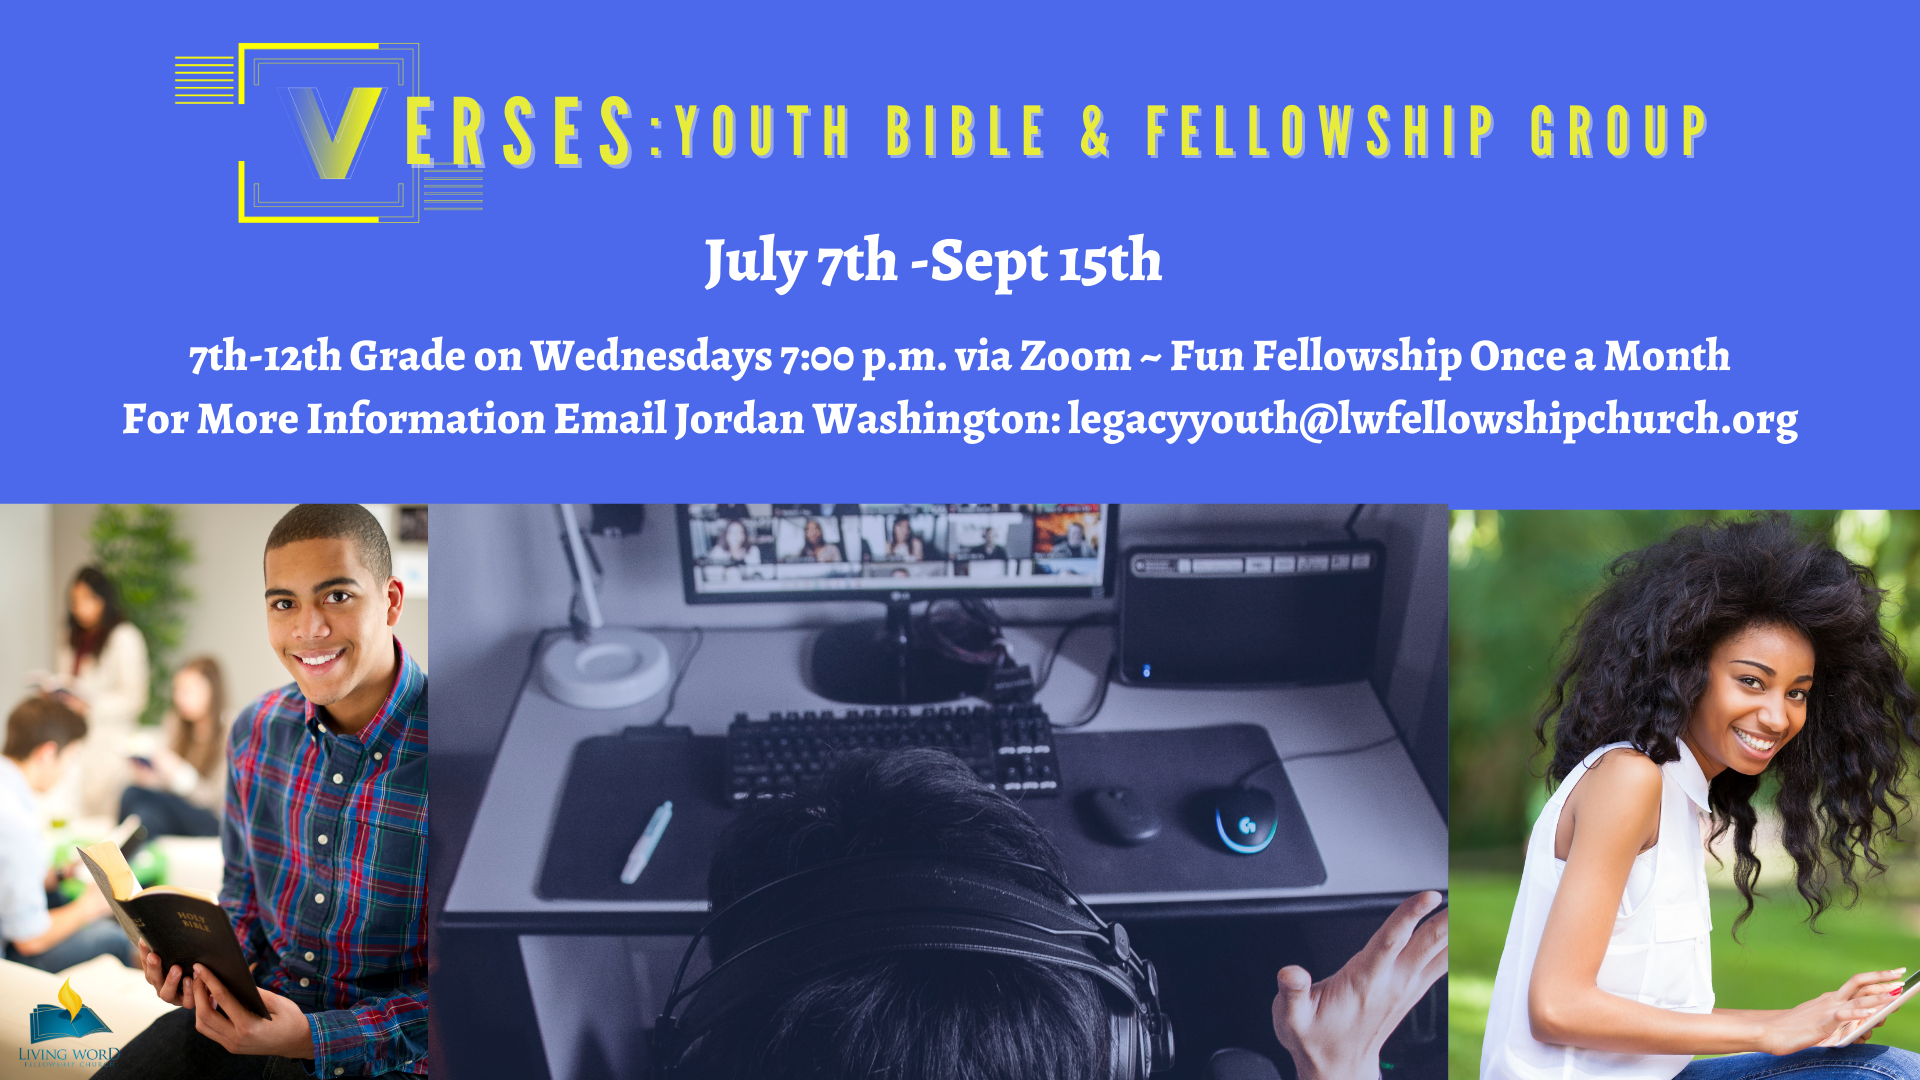 VERSES – Youth Bible & Fellowship Group head image